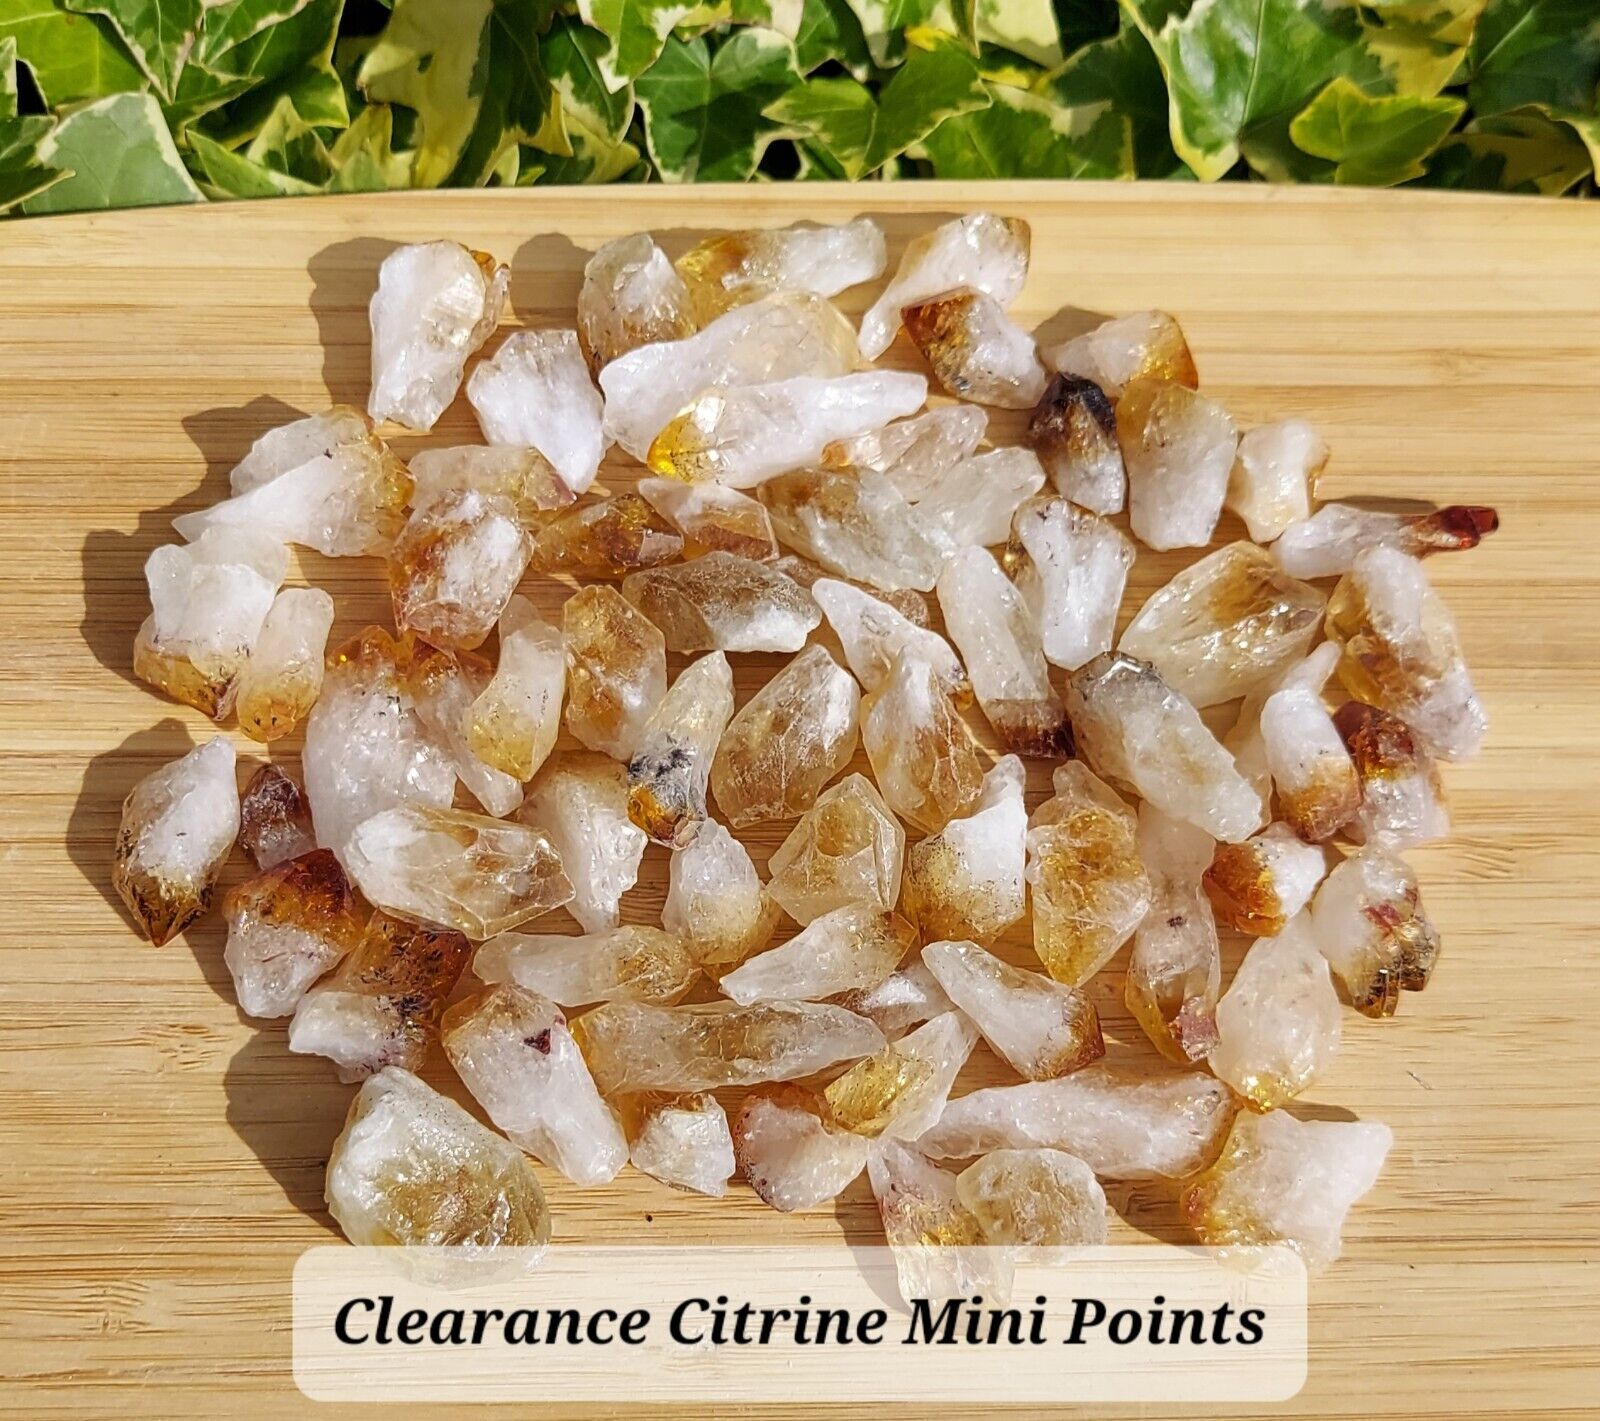 CLEARANCE, 10 Citrine mini Points, Citrine Clearance, Citrine Mini Points.